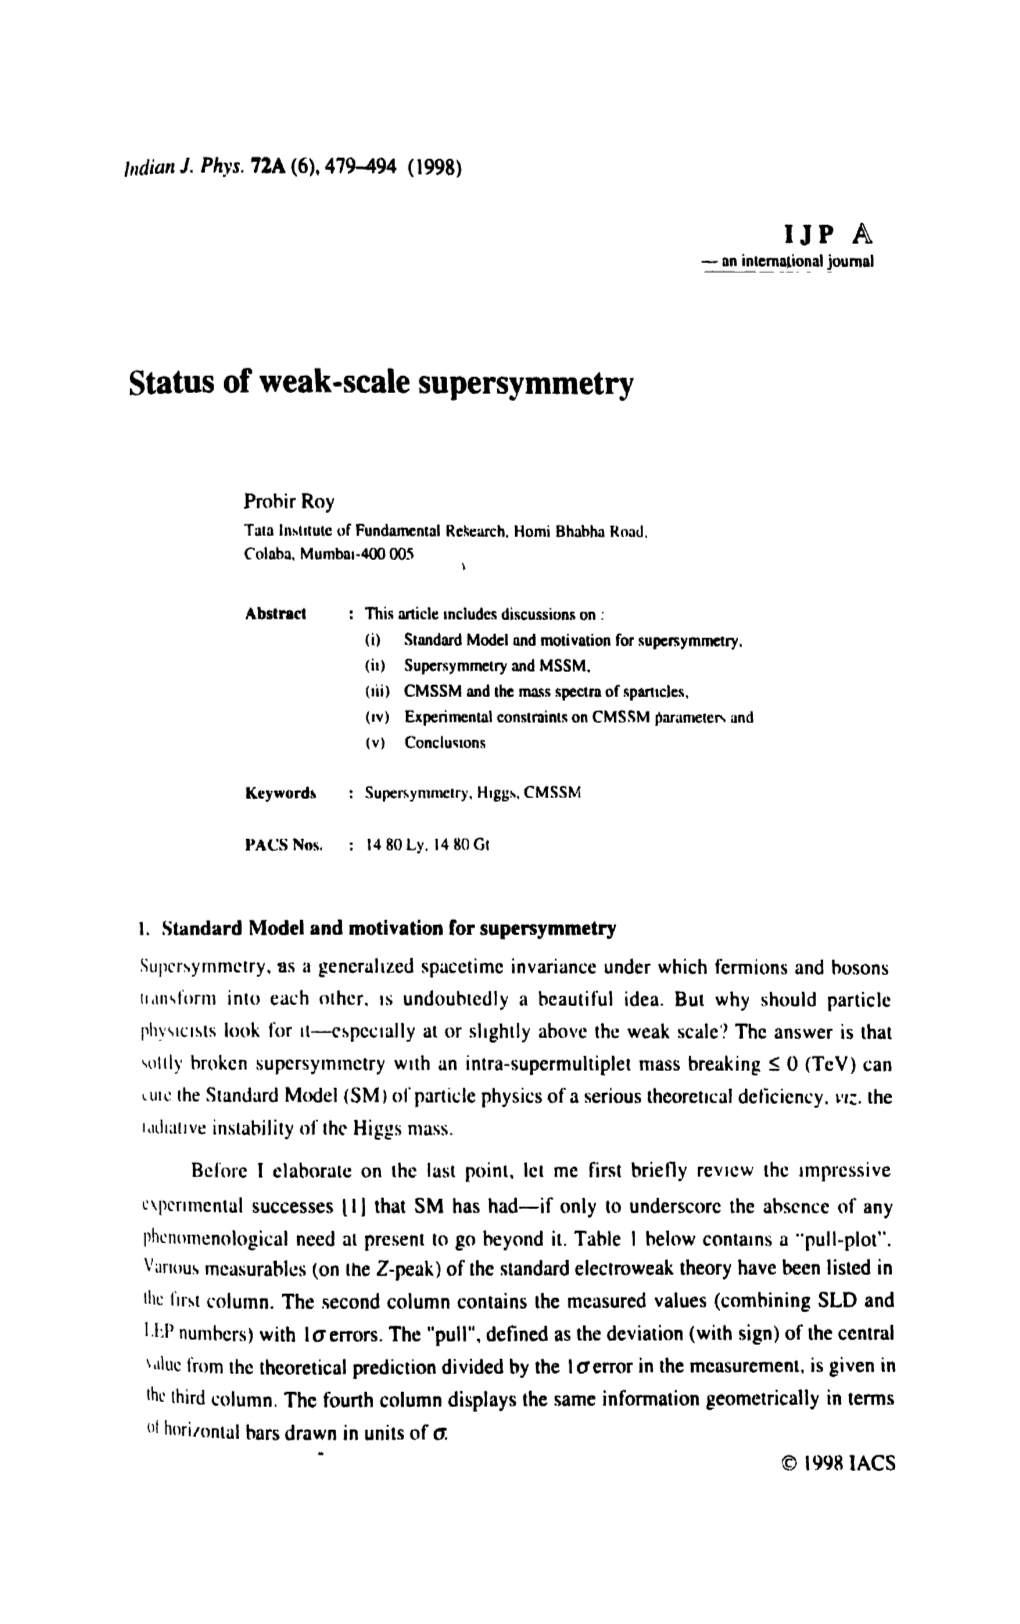 IJP a Status of Weak-Scale Supersymmetry 1